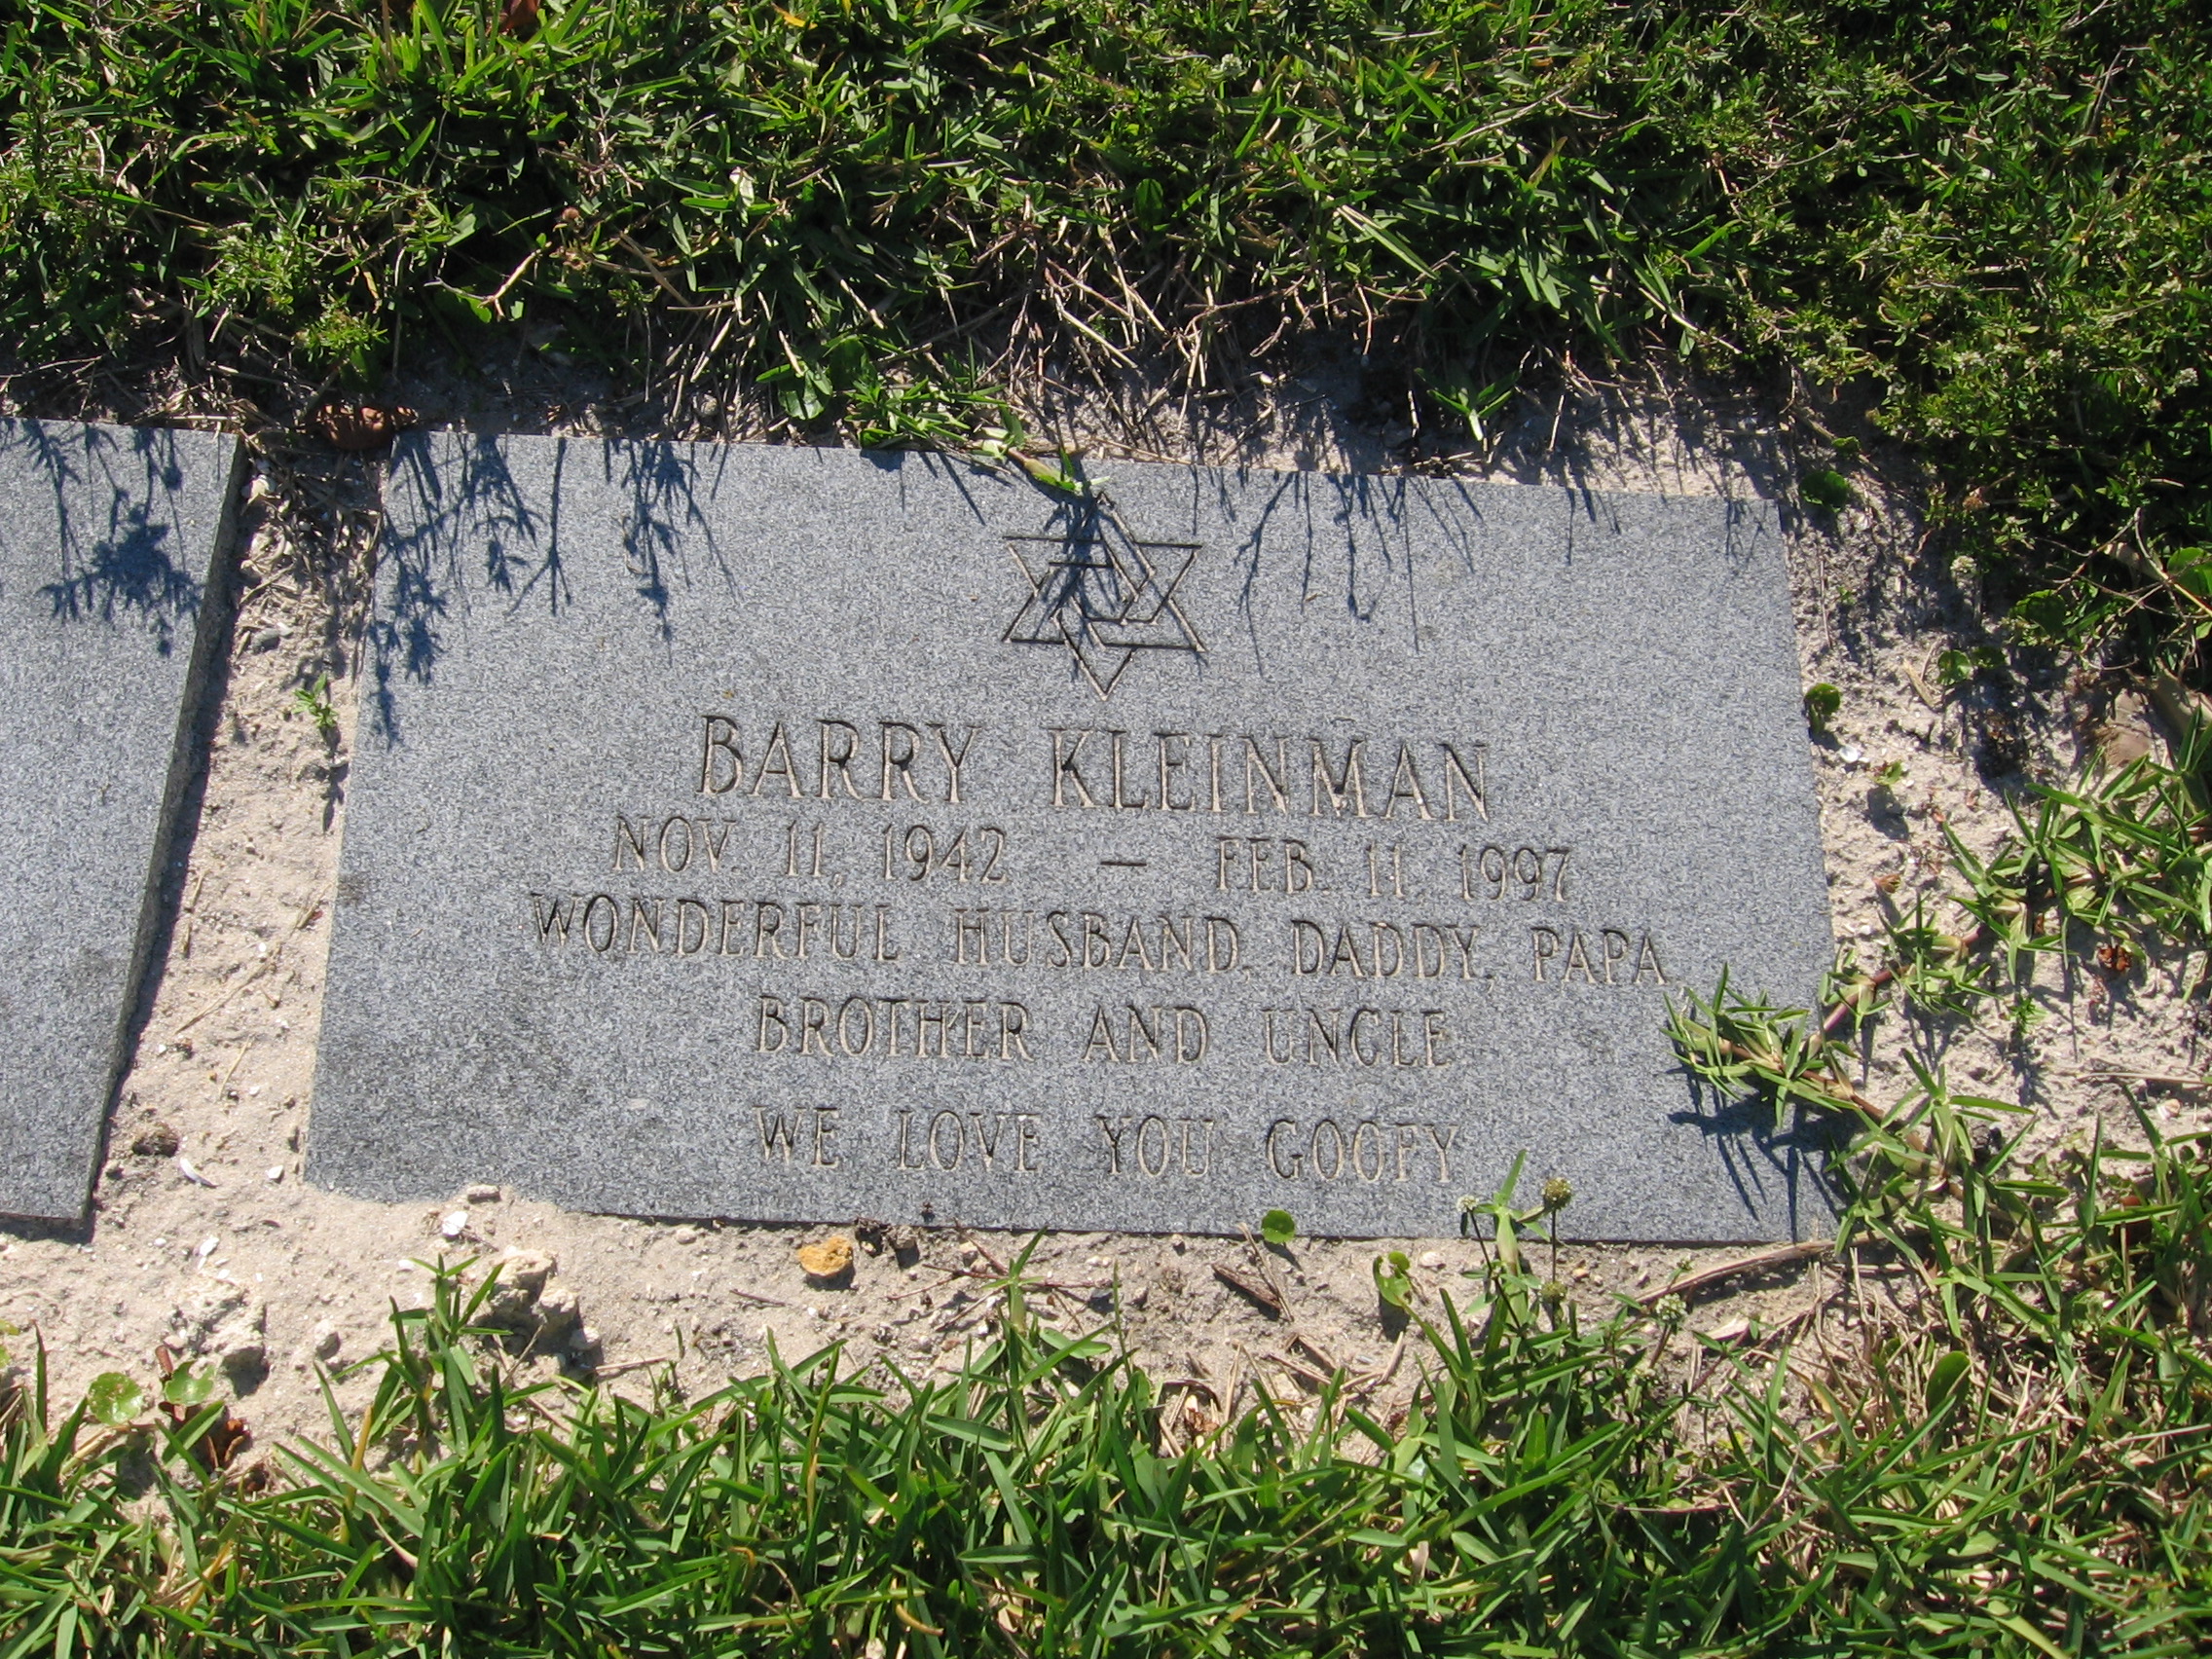 Barry Kleinman